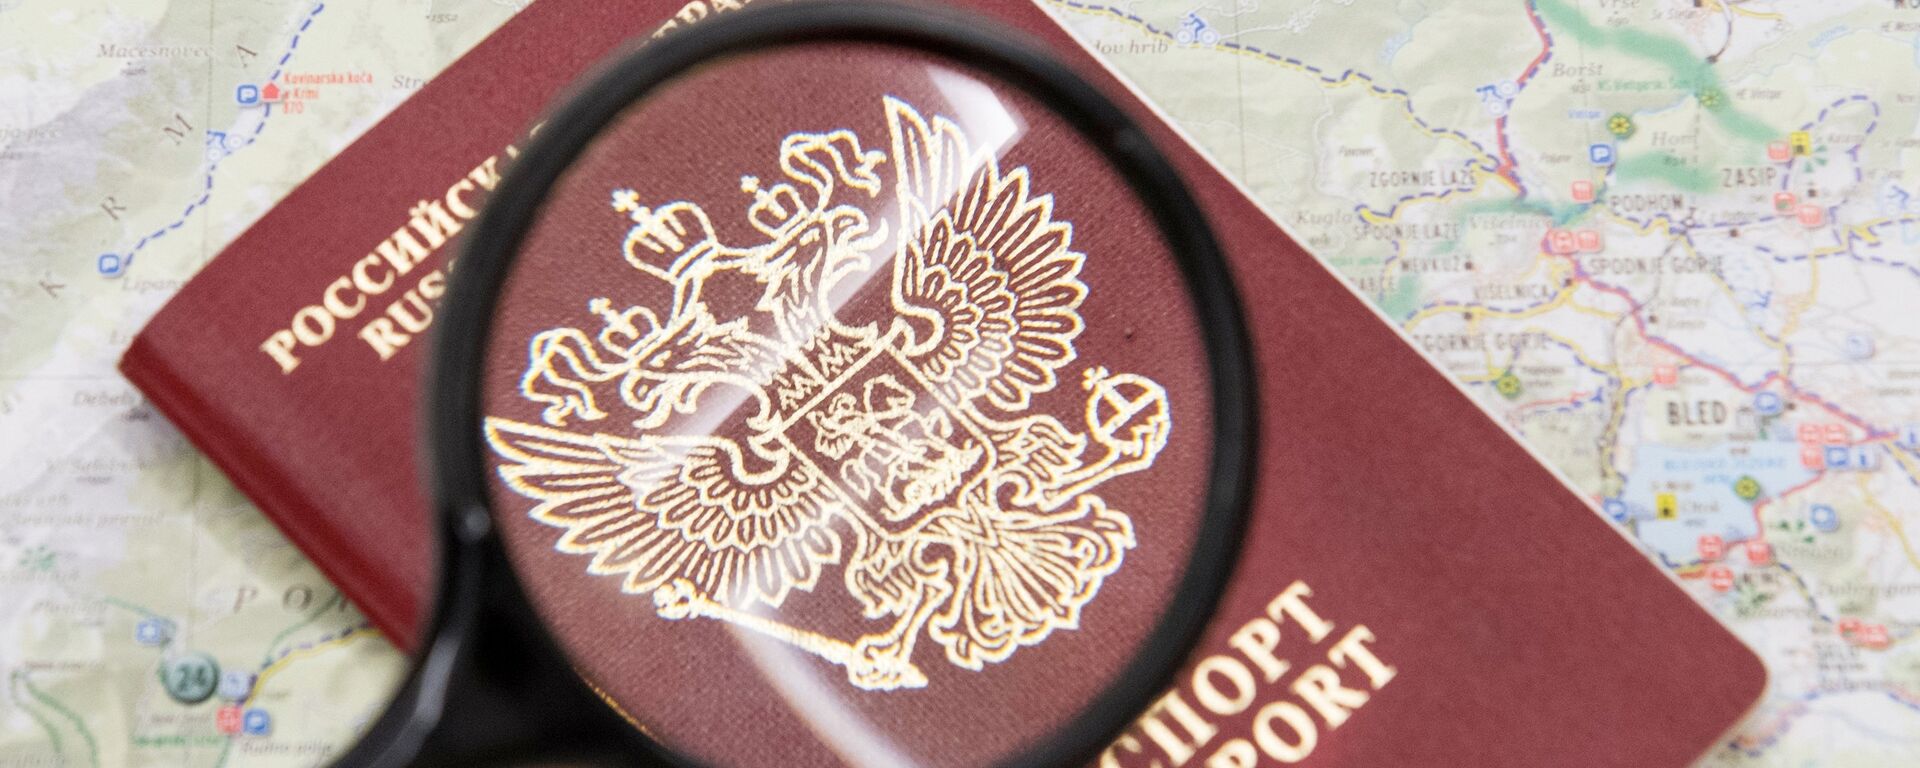 Un pasaporte ruso - Sputnik Mundo, 1920, 11.07.2022